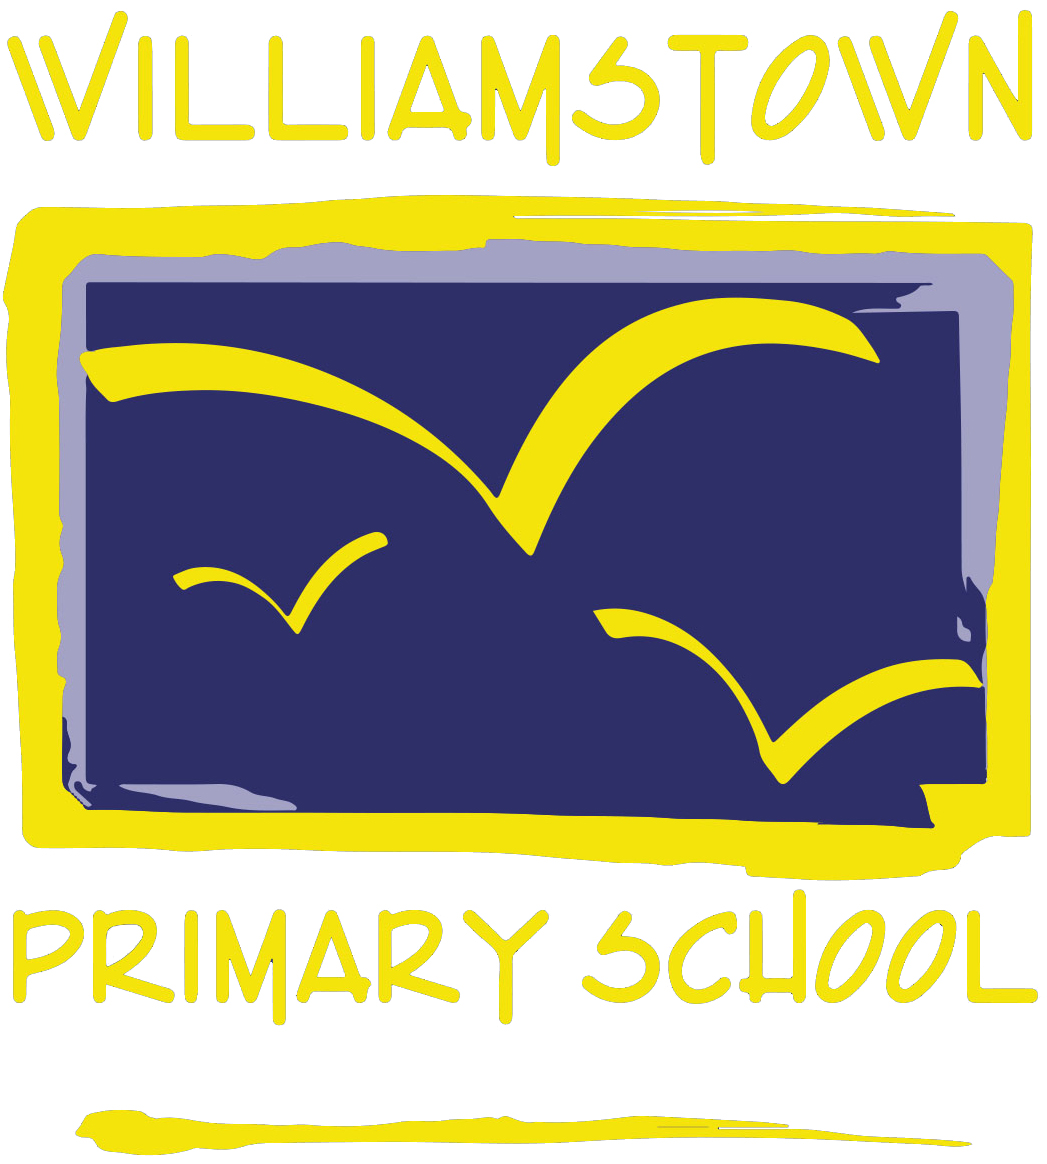 Williamstown Primary School